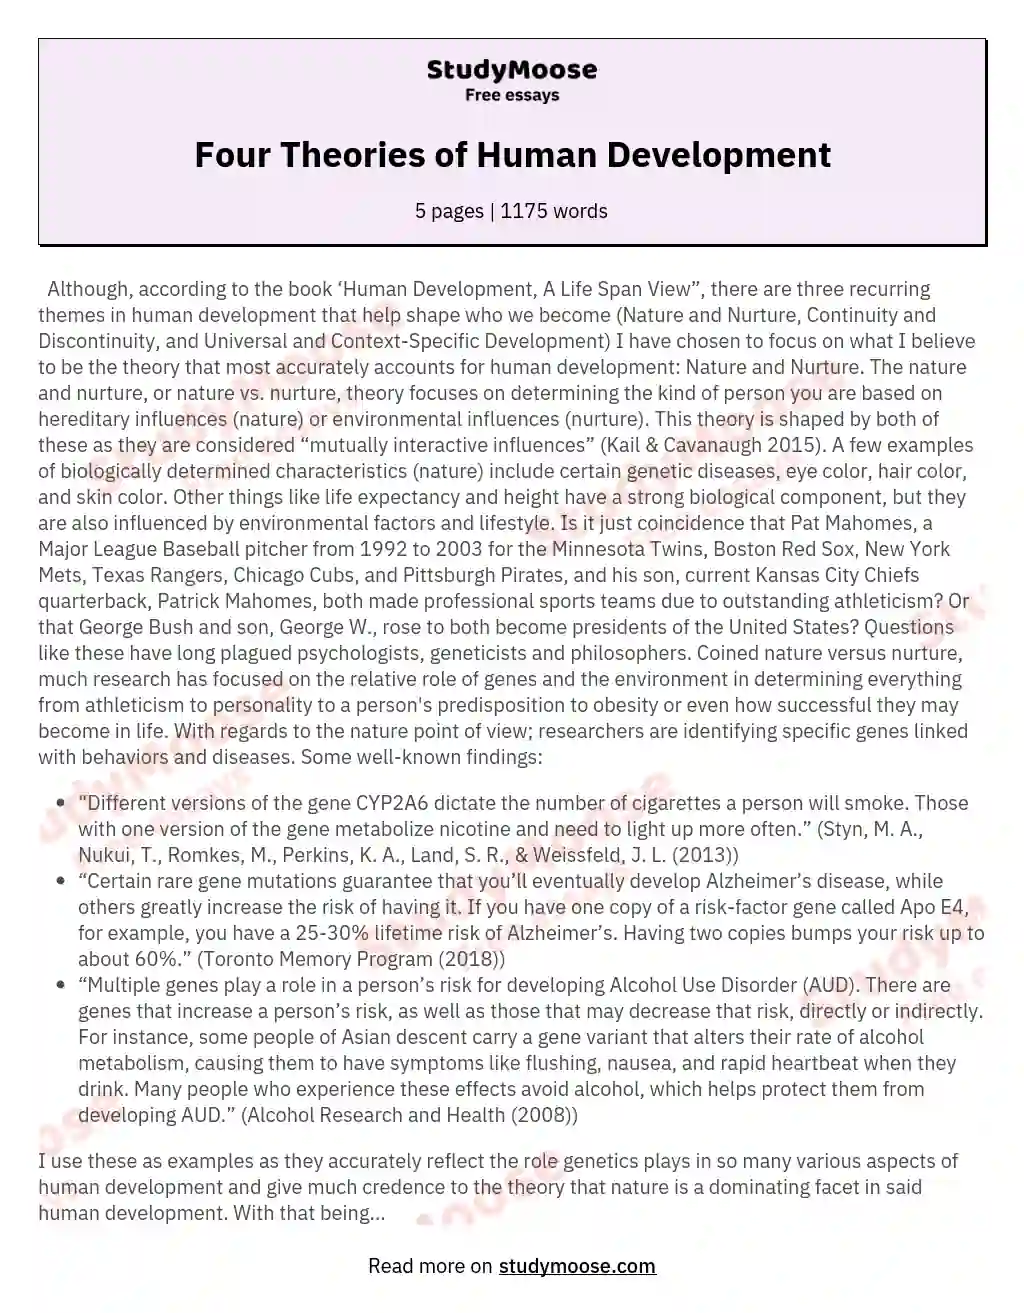 Four Theories of Human Development essay